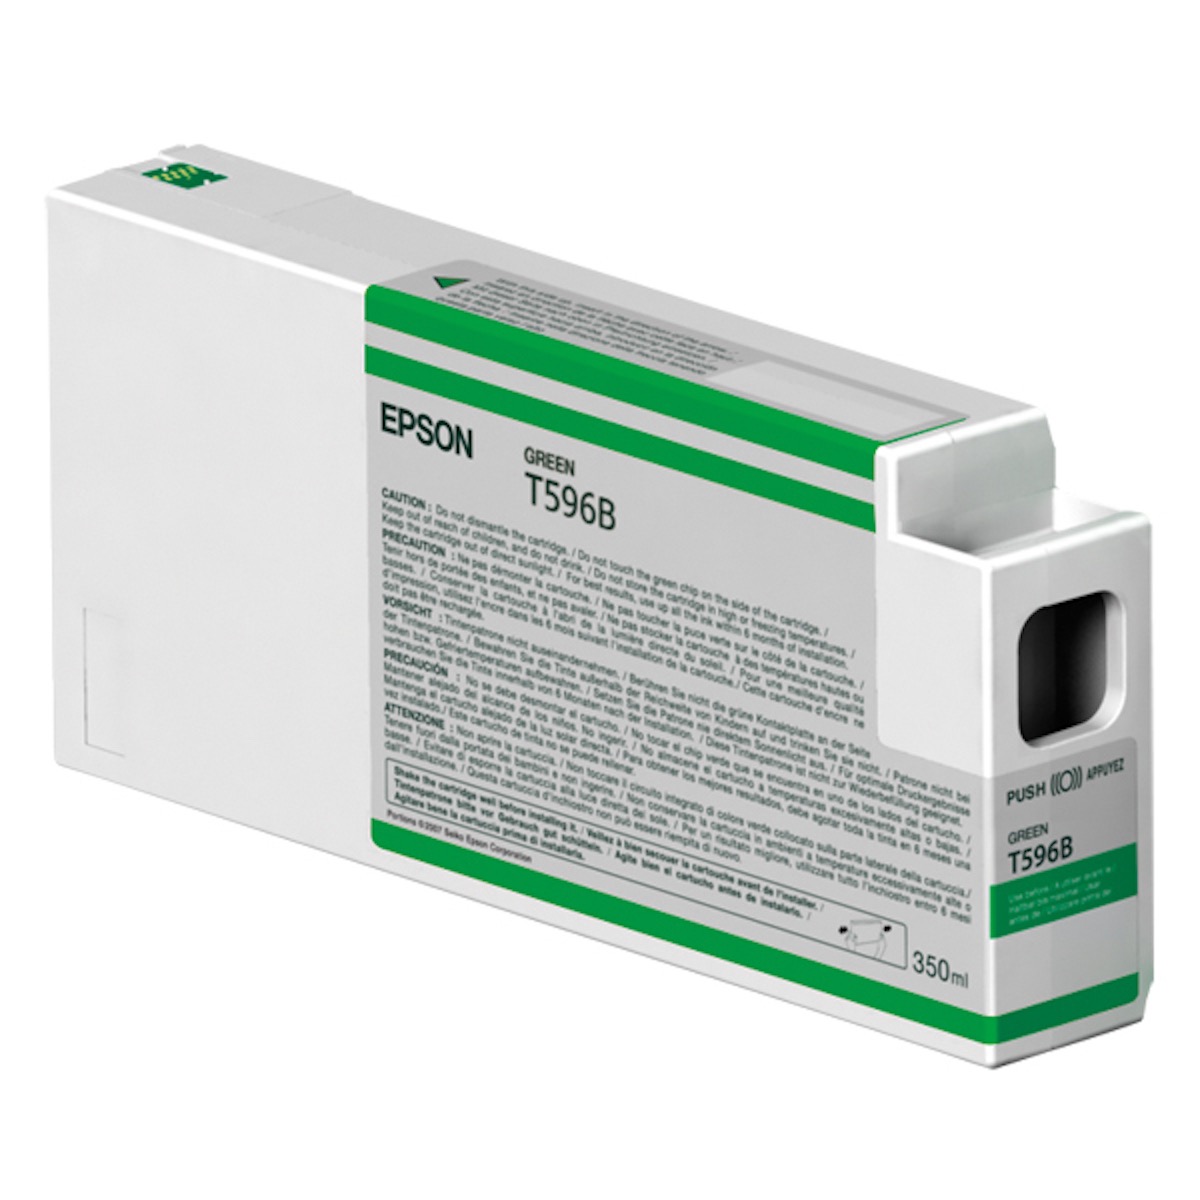 Epson T596B grün Tinte